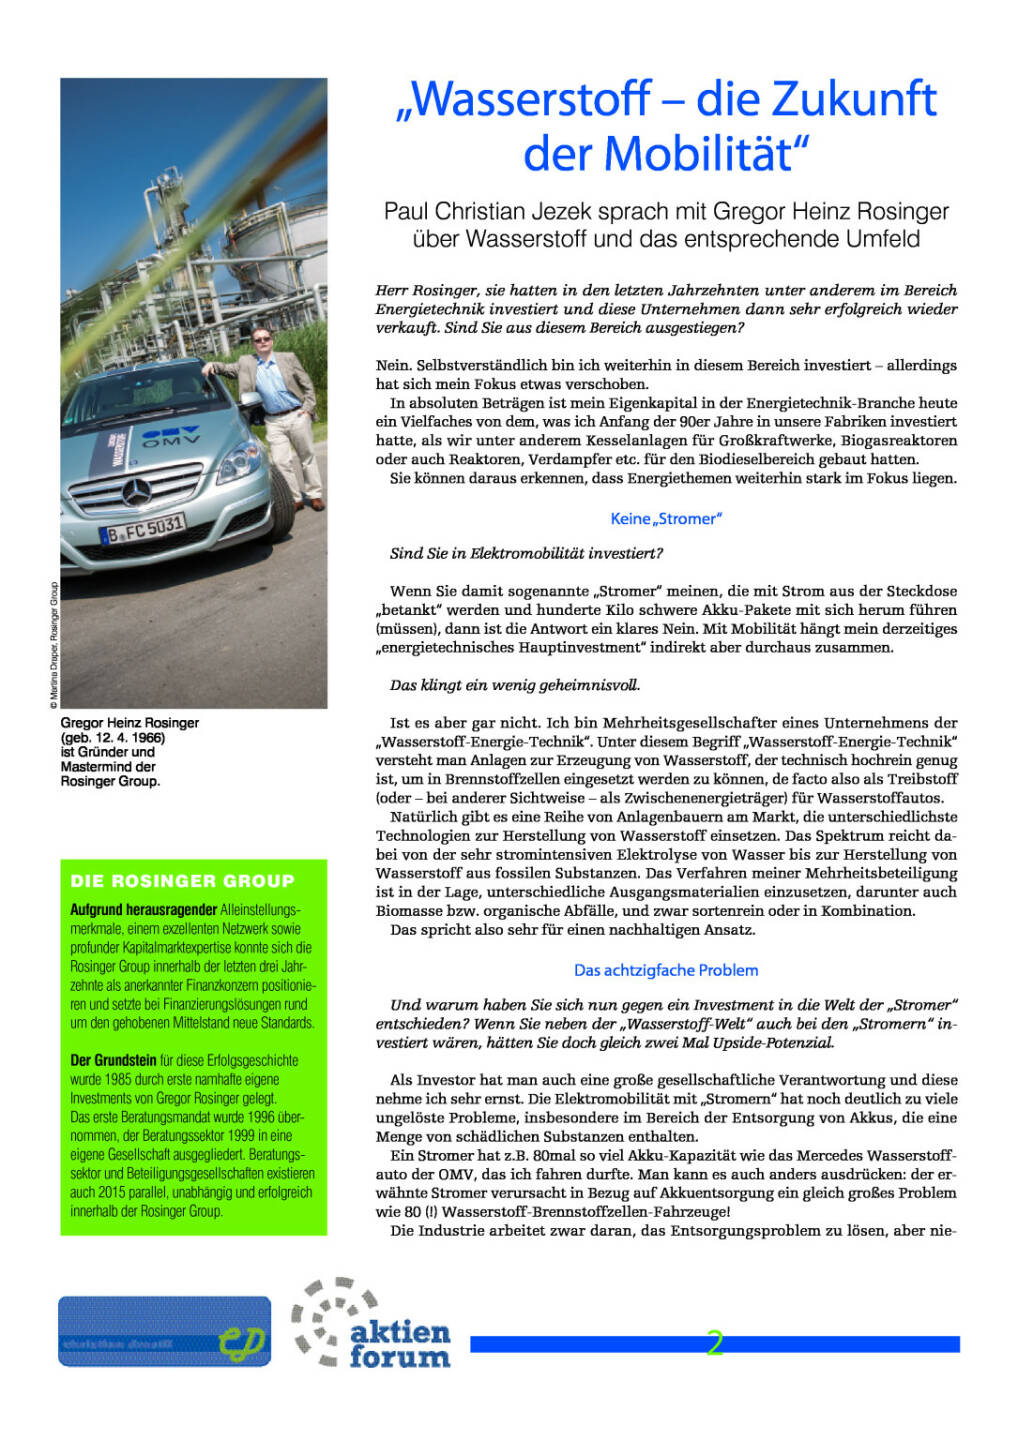 Rosinger Group zu Wasserstoff, die Zukunft der Mobilität, Seite 2/12, komplettes Dokument unter http://boerse-social.com/static/uploads/file_166_rosinger_group_wasserstoff.pdf